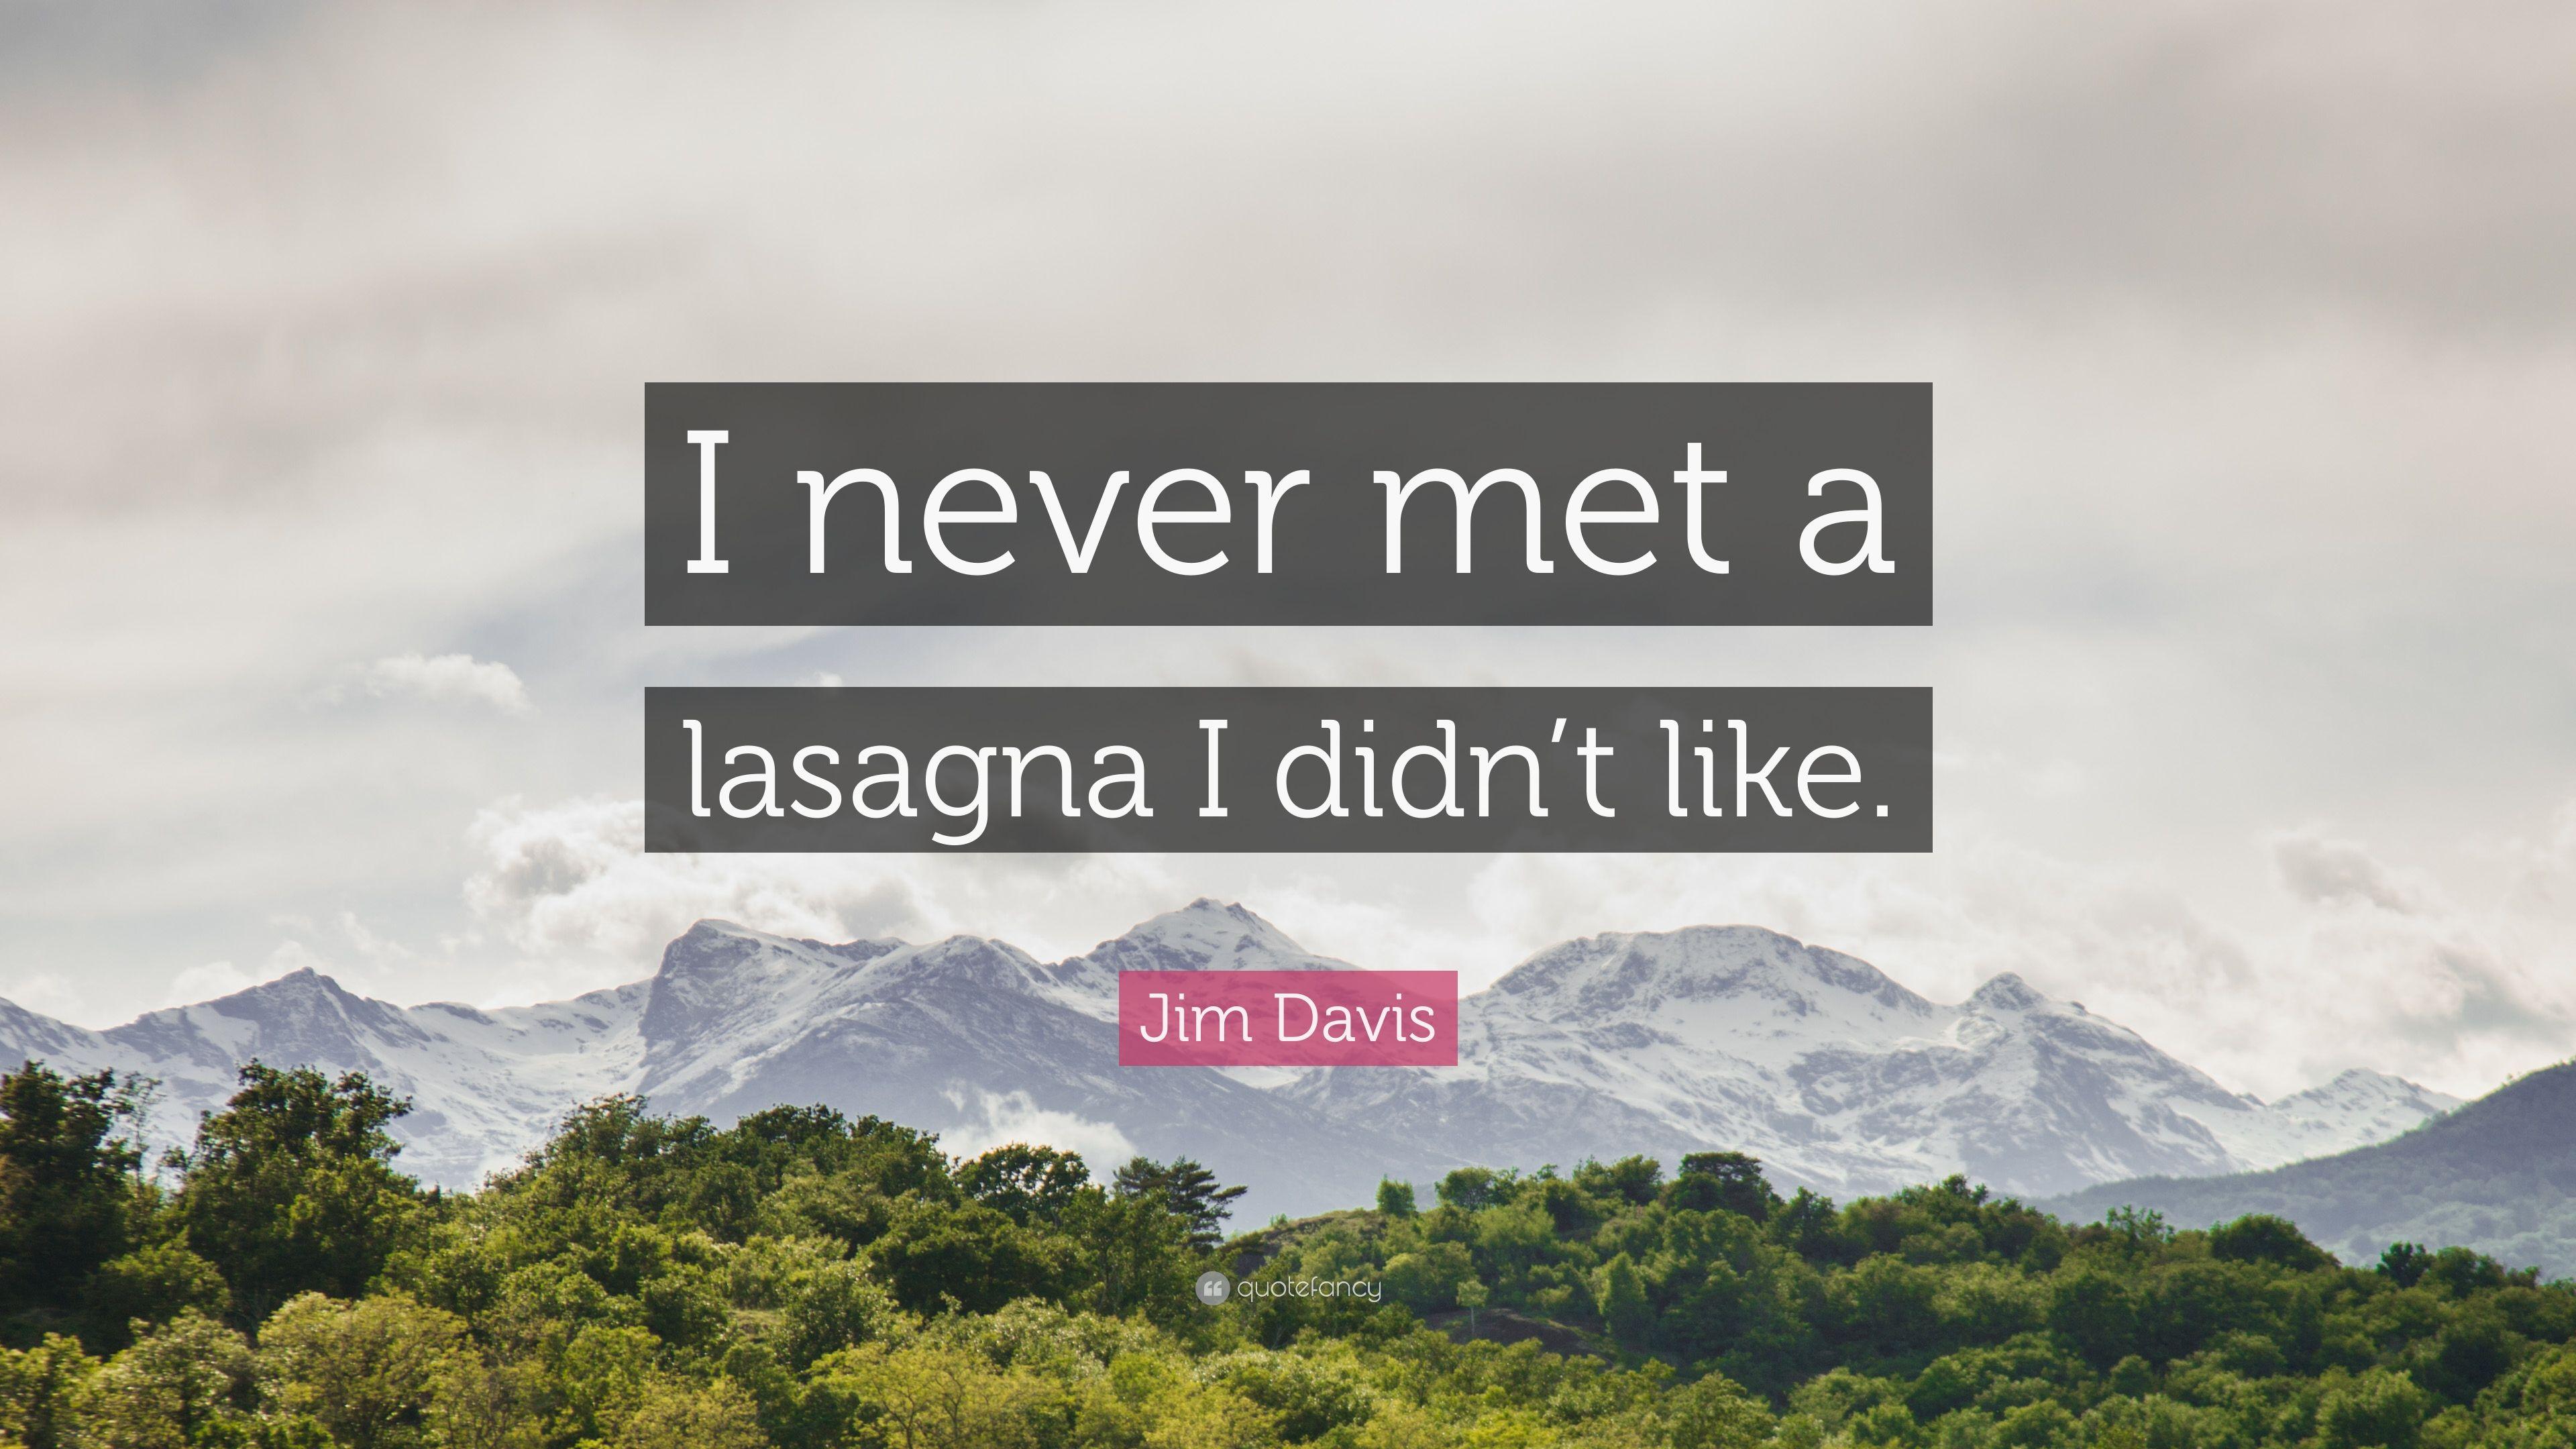 Jim Davis Quote: “I never met a lasagna I didn't like.” 7